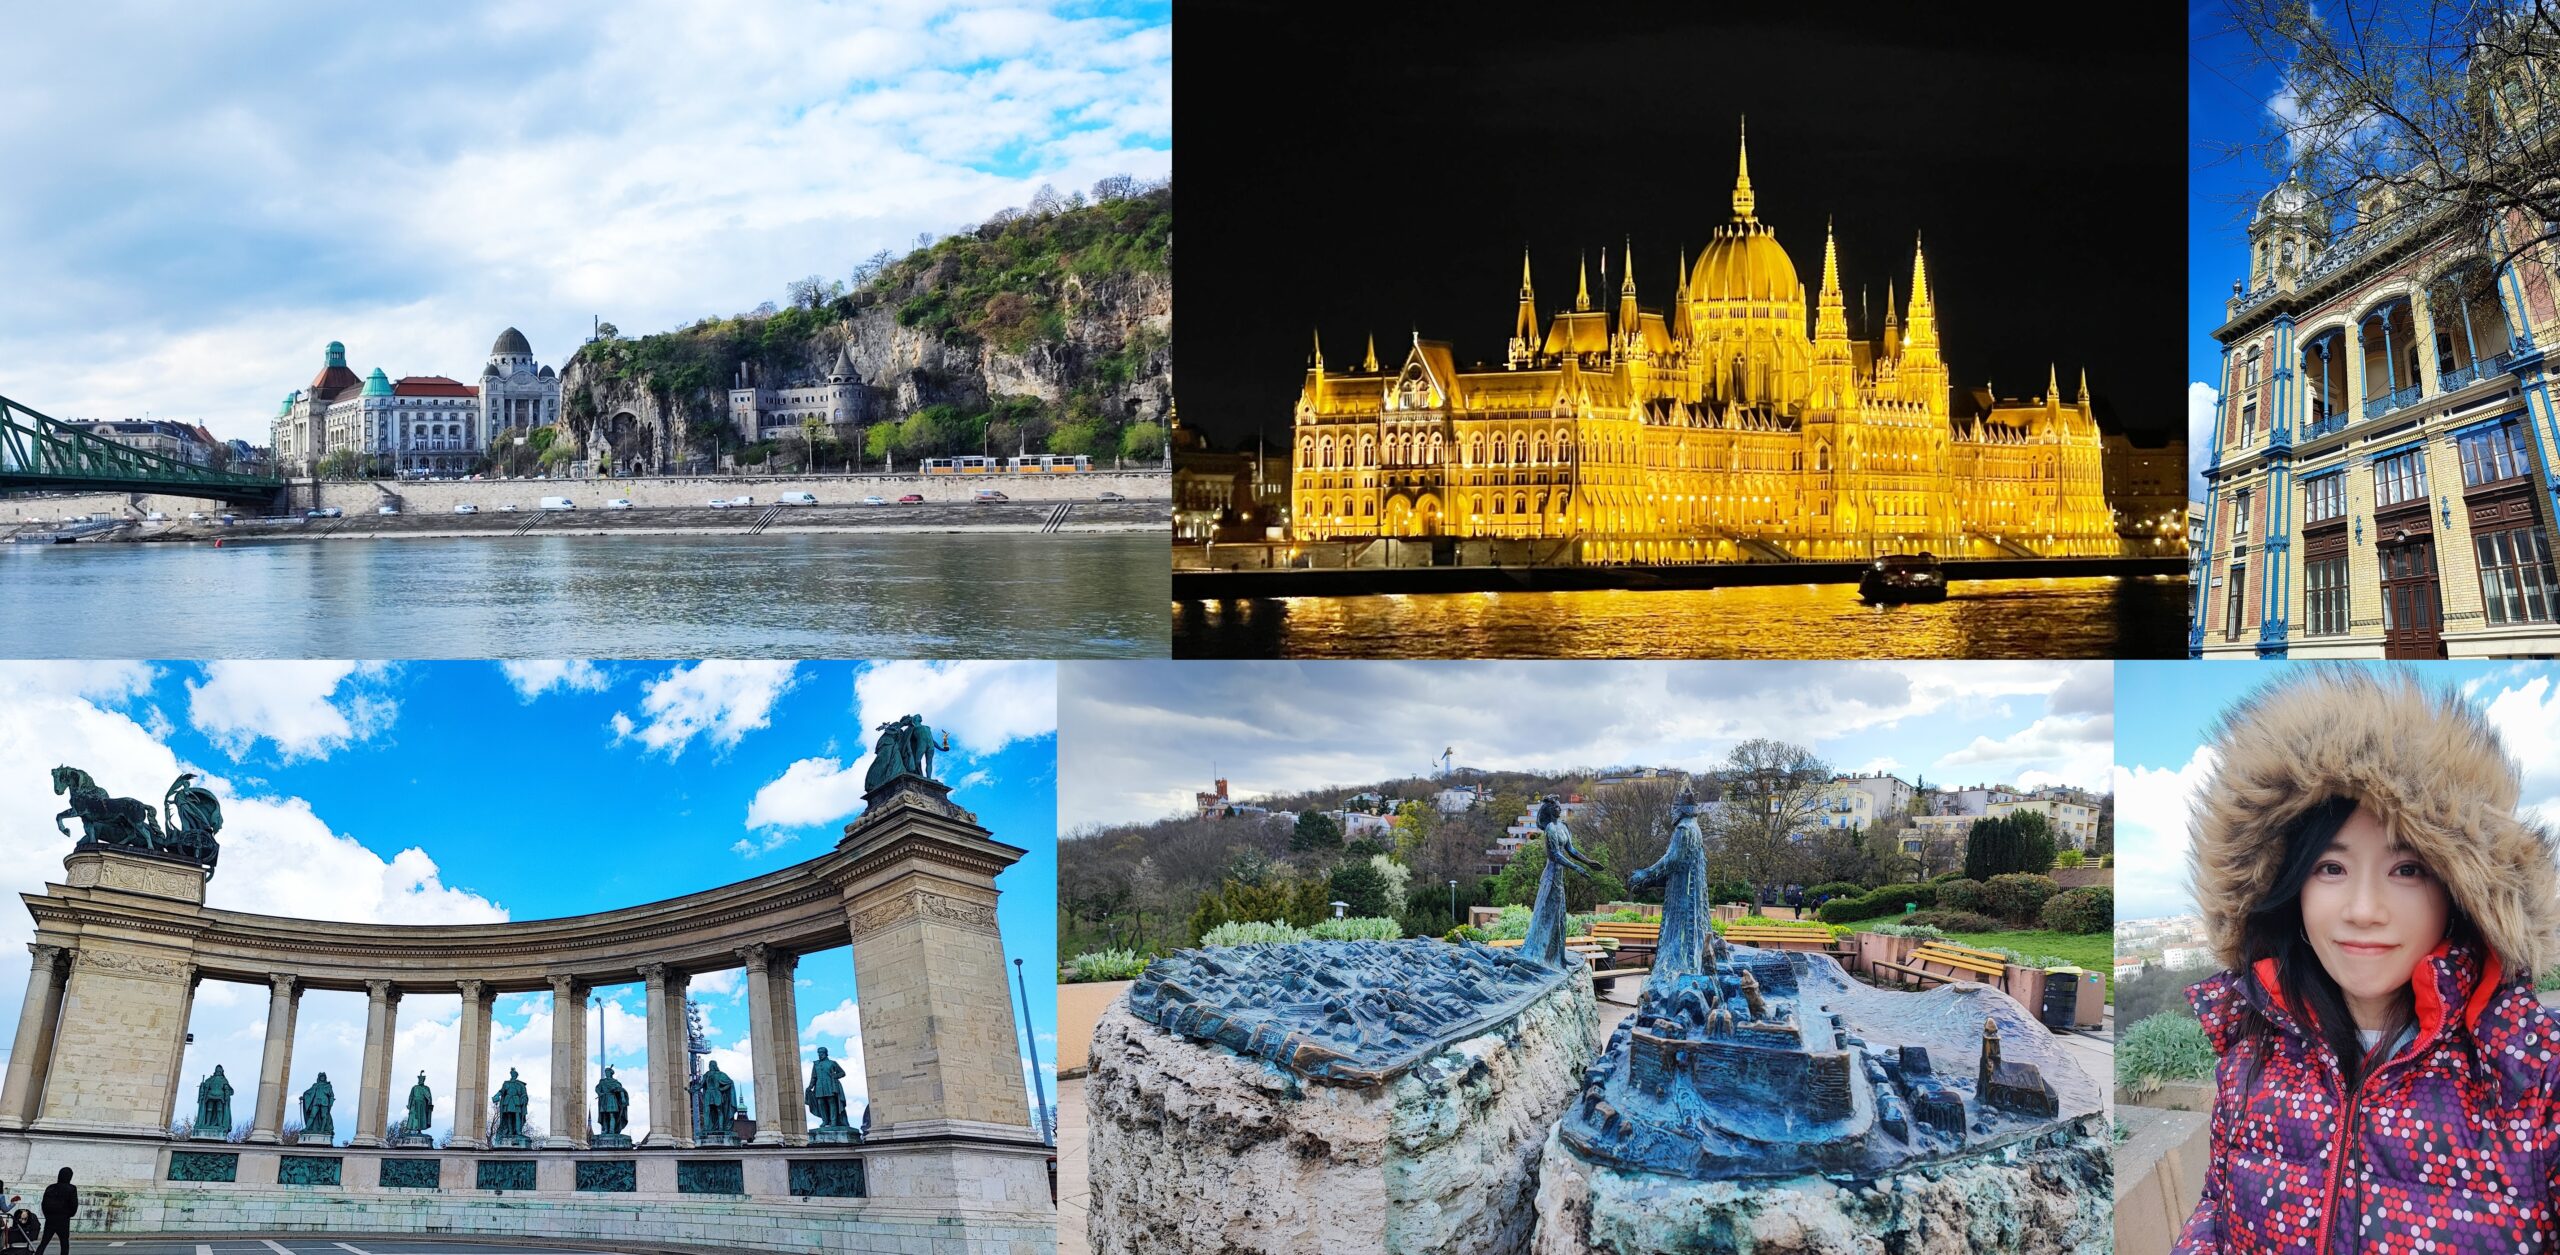 UNIWORD Boutique River Cruises寰宇精品河輪,中歐,匈牙利Hungary,布達佩斯BudaPest,歐洲旅遊,歐洲精品河輪,英雄廣場Heroes’Square